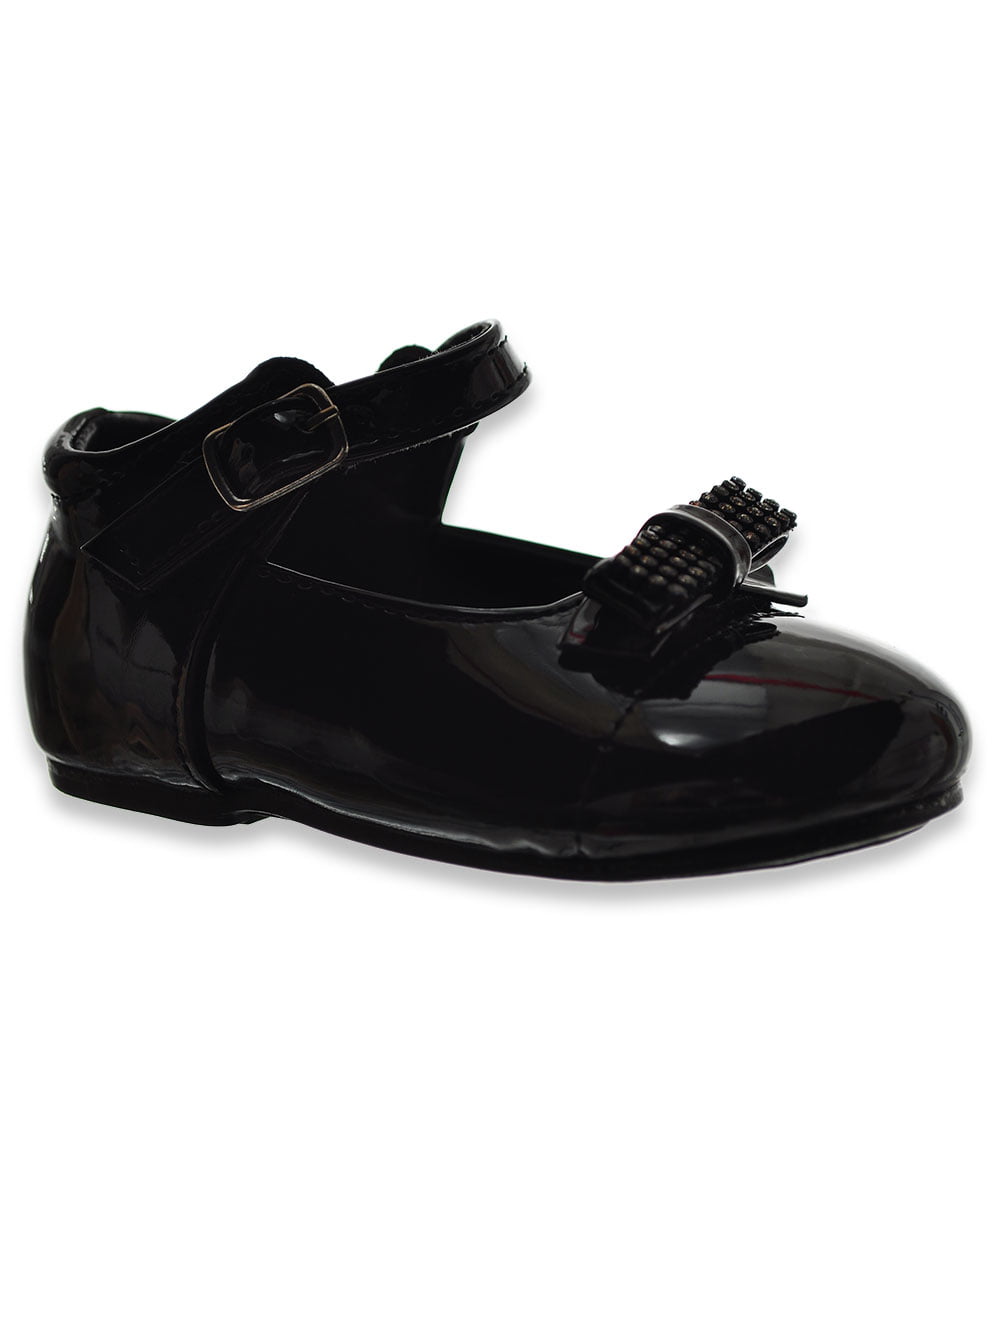 Angels New York 2242445 Girls Black Patent Dressy Mary Janes Rhinestone Shoes 